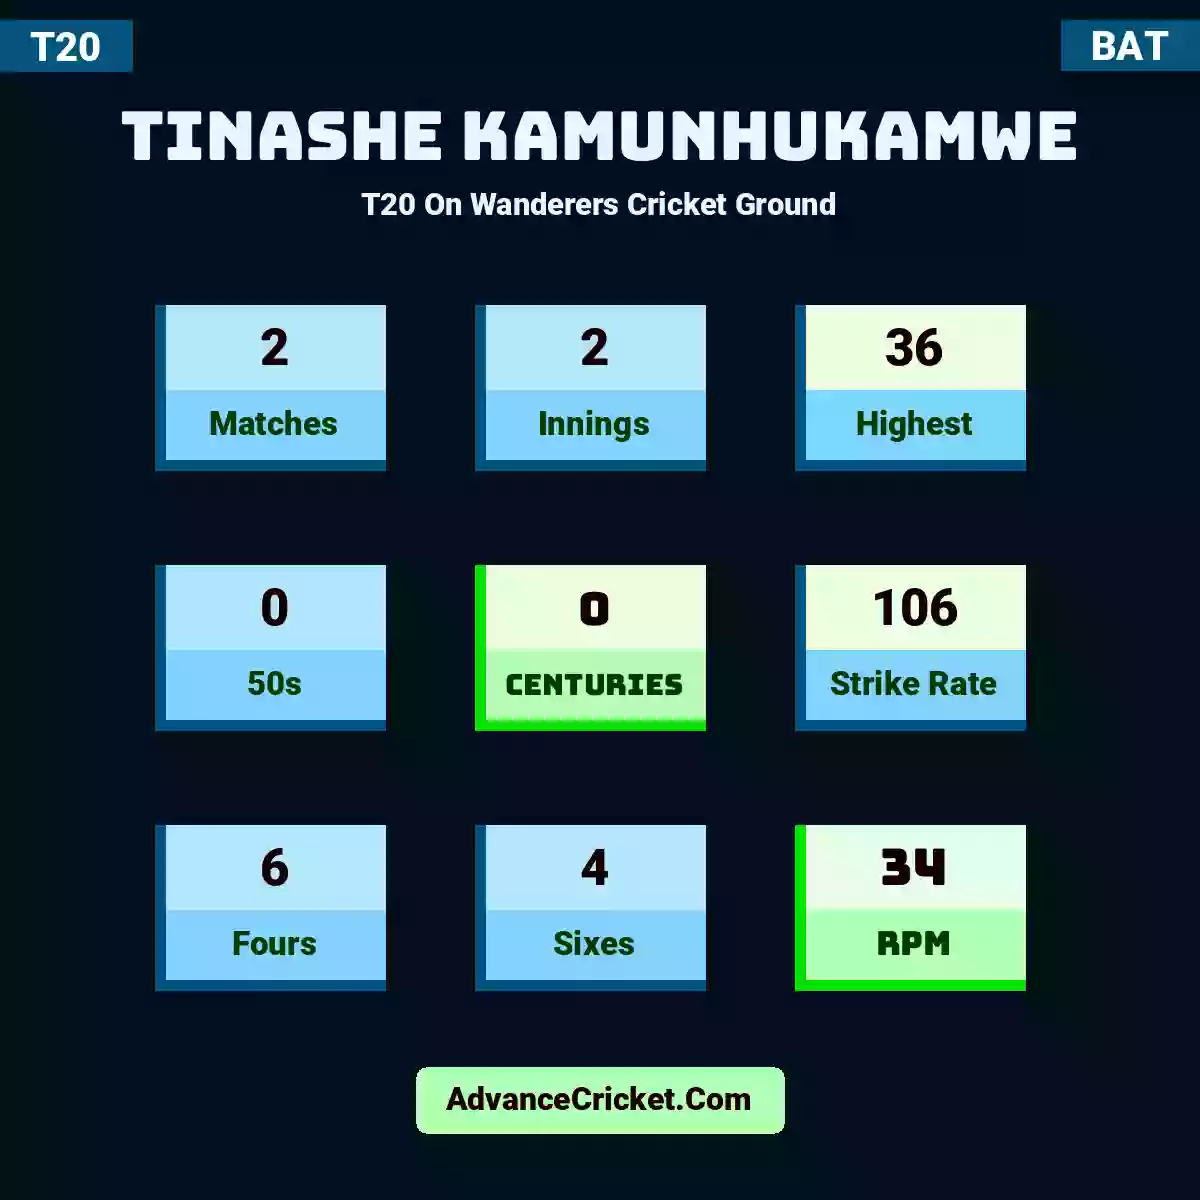 Tinashe Kamunhukamwe T20  On Wanderers Cricket Ground, Tinashe Kamunhukamwe played 2 matches, scored 36 runs as highest, 0 half-centuries, and 0 centuries, with a strike rate of 106. T.Kamunhukamwe hit 6 fours and 4 sixes, with an RPM of 34.